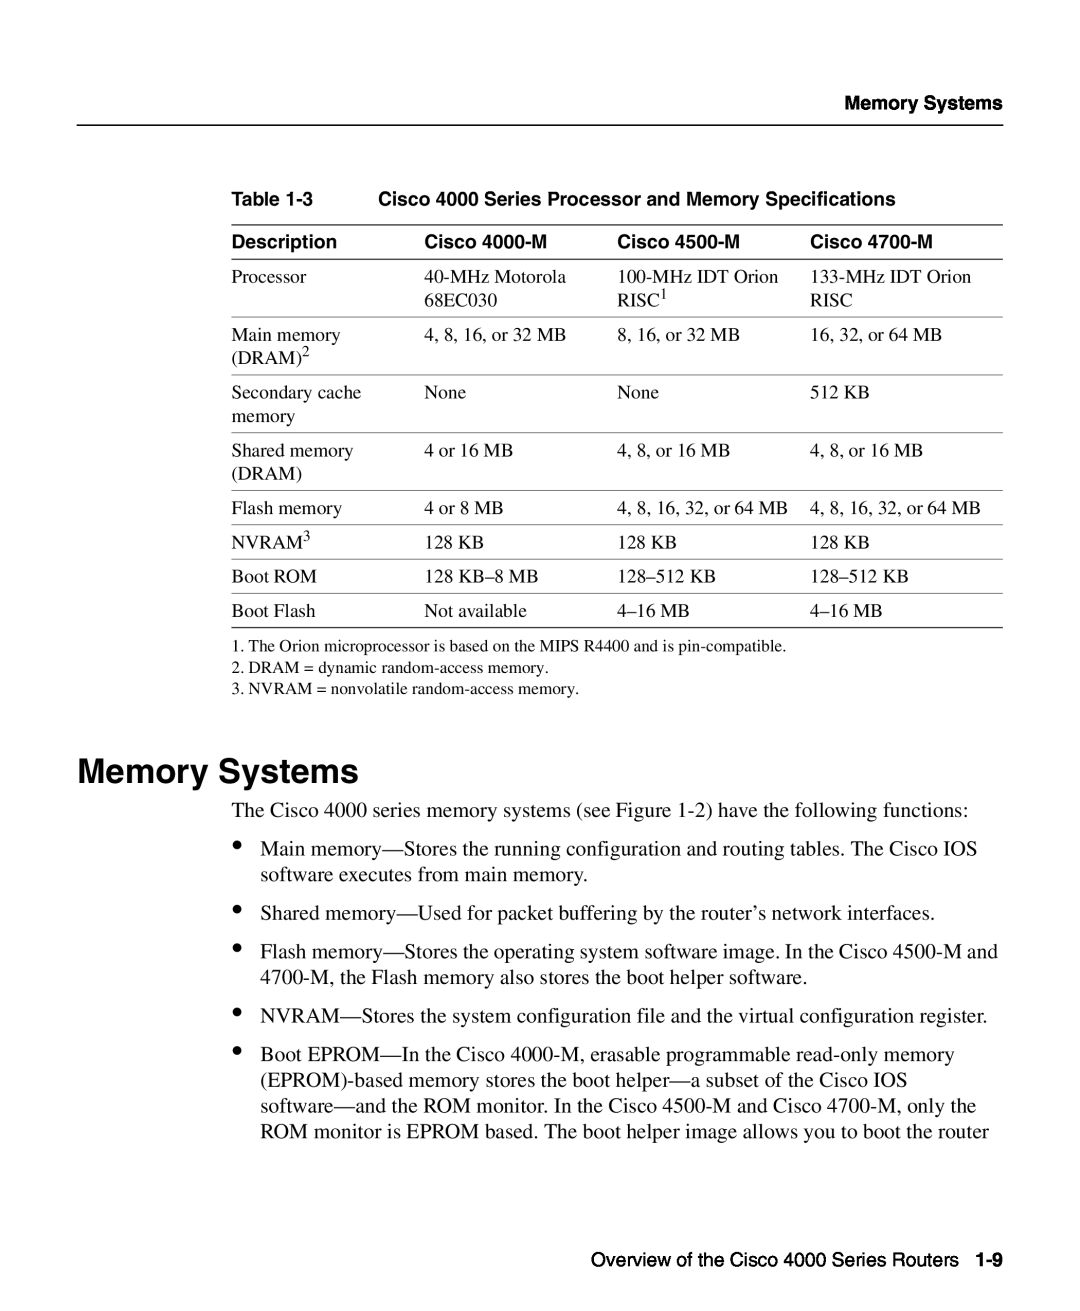 Cisco Systems 4000 manual Memory Systems, DRAM = dynamic random-access memory, NVRAM = nonvolatile random-access memory 